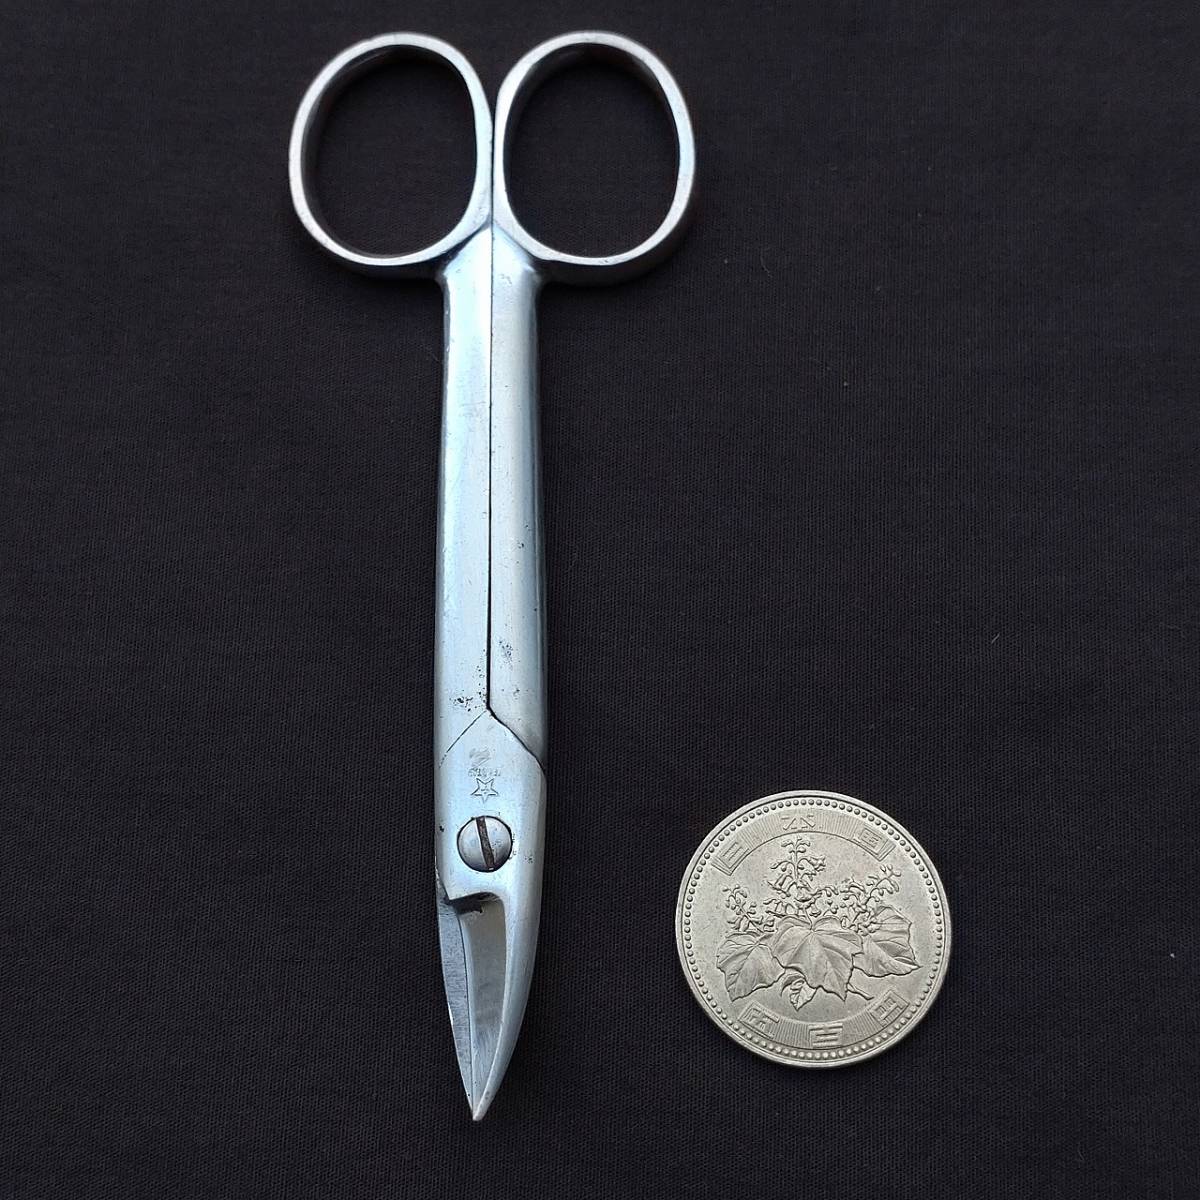  small size .TEN STAR. bending type total length approximately 112. scissors tongs Japanese Scissors [4639]